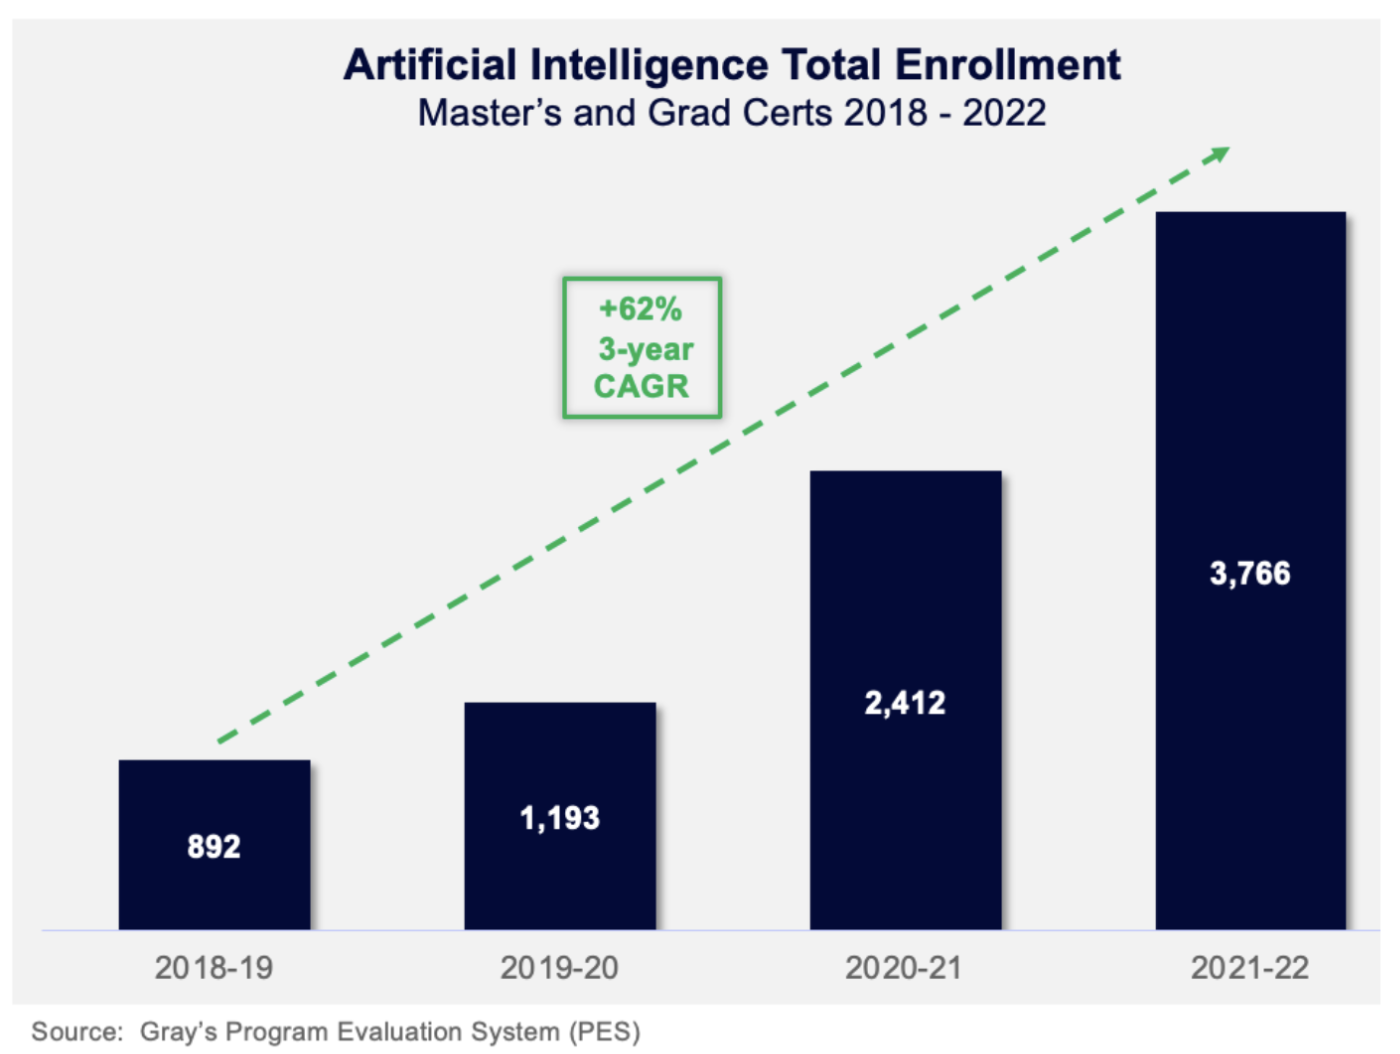 Artificial Intelligence Total Enrollment (Master's and Grad certs 2018-2022)